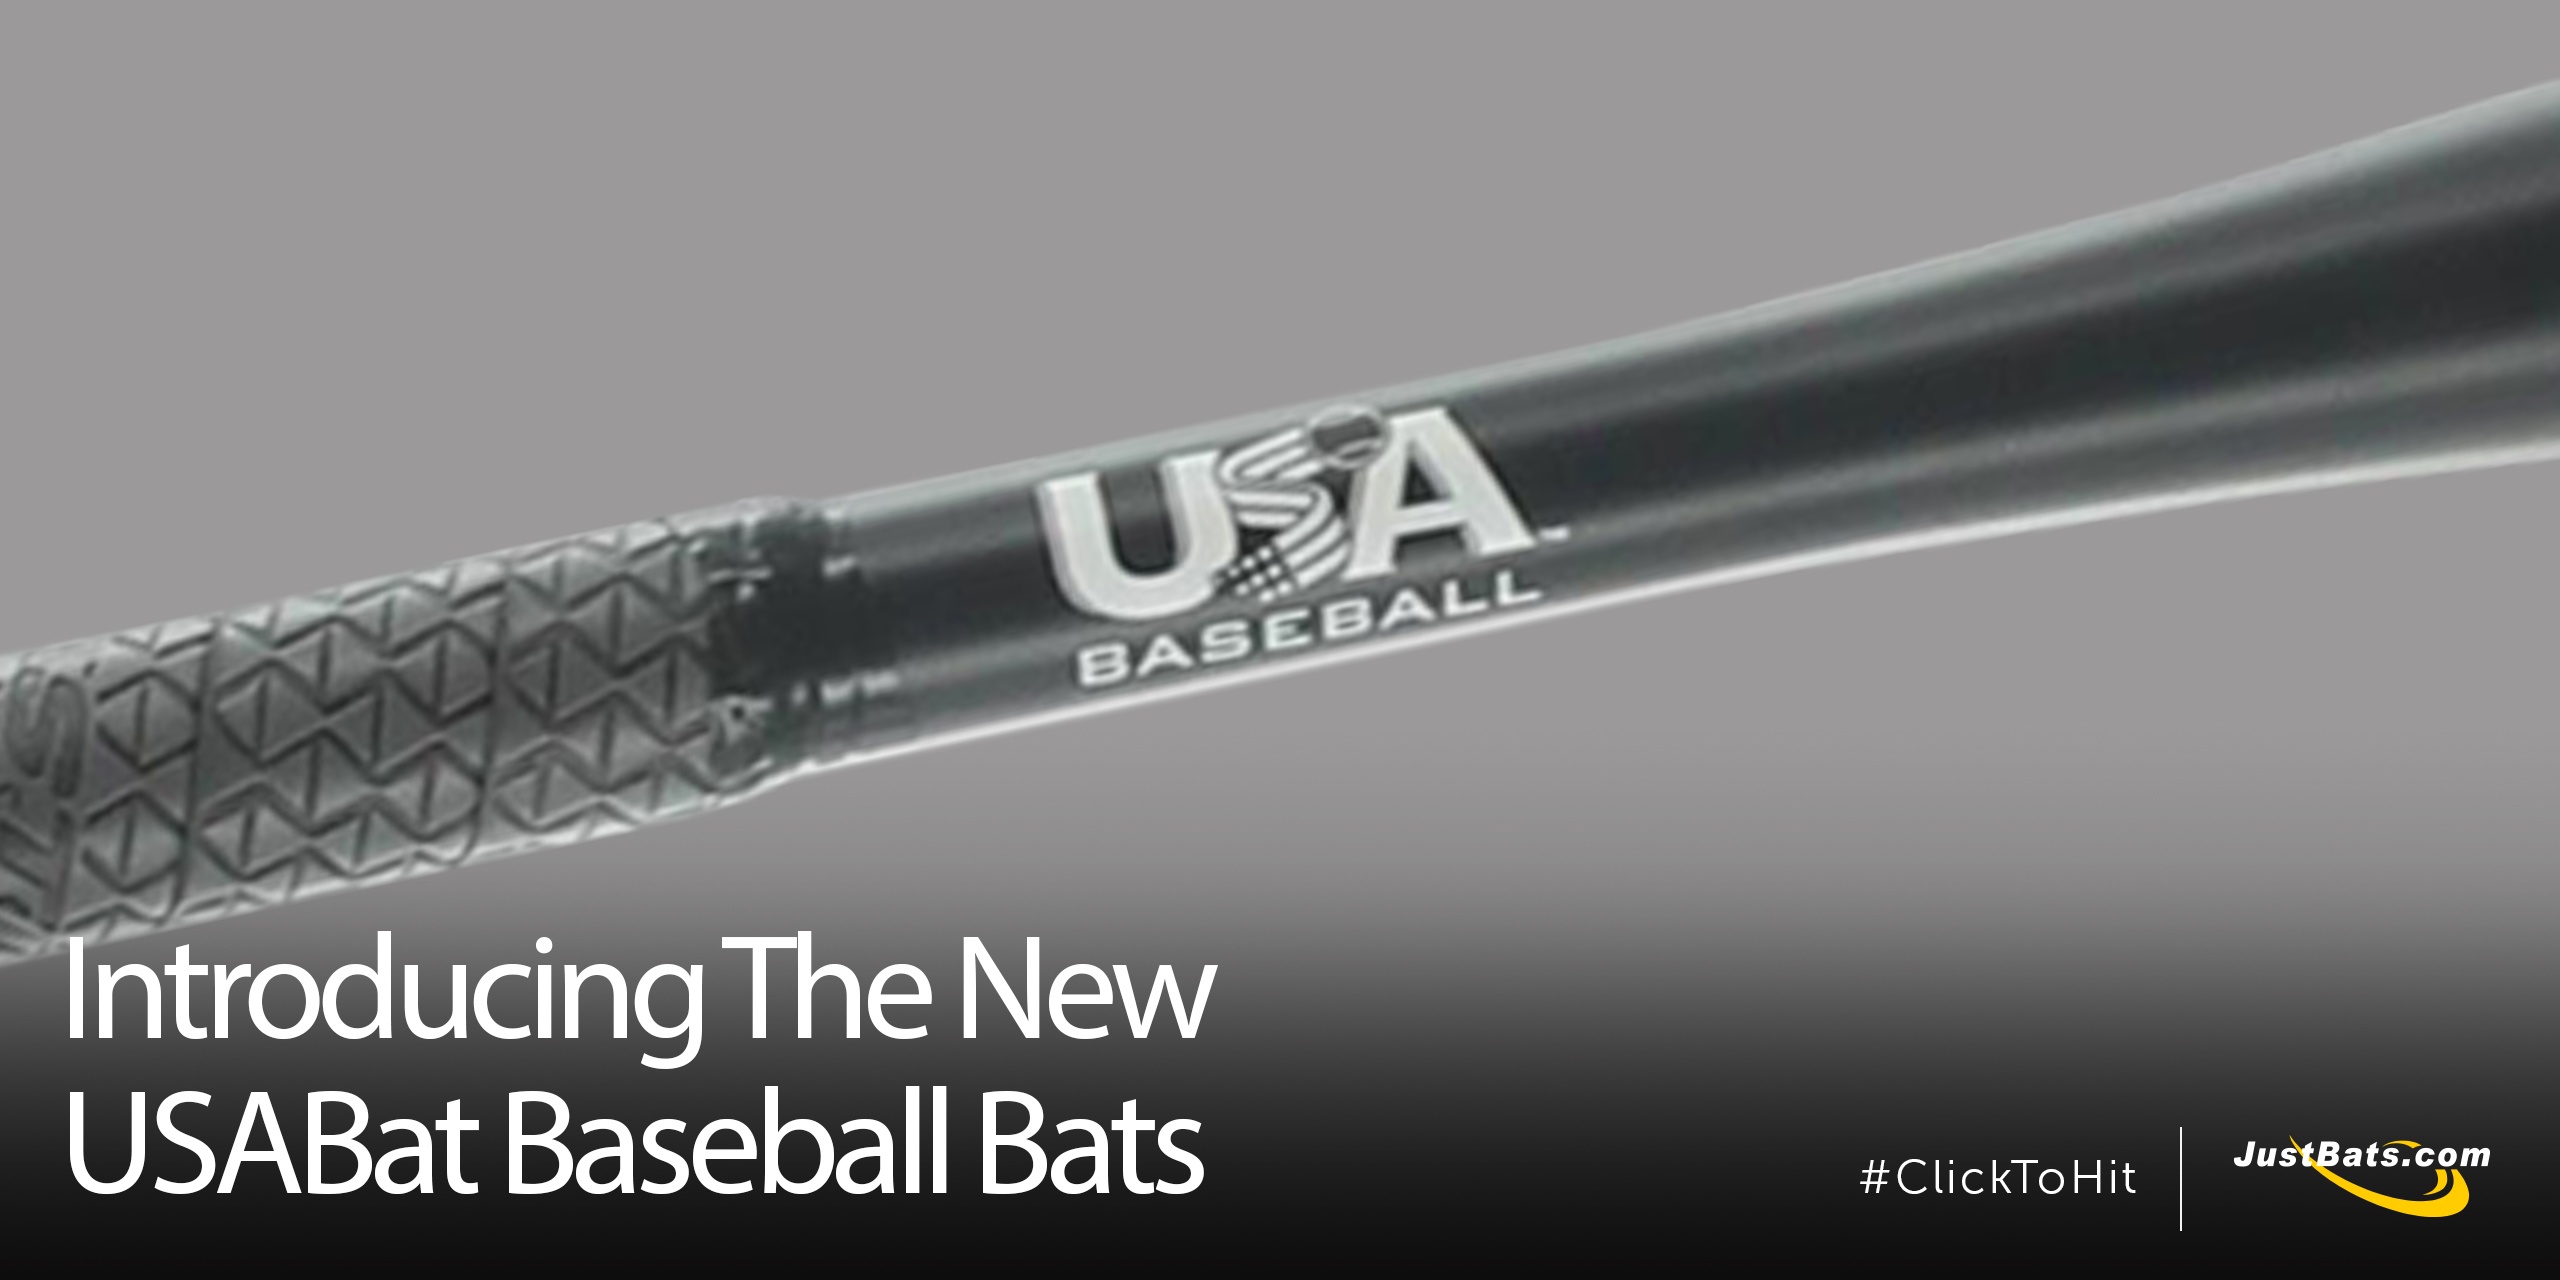 Introducing The New USABat Baseball Bats - Blog.jpg